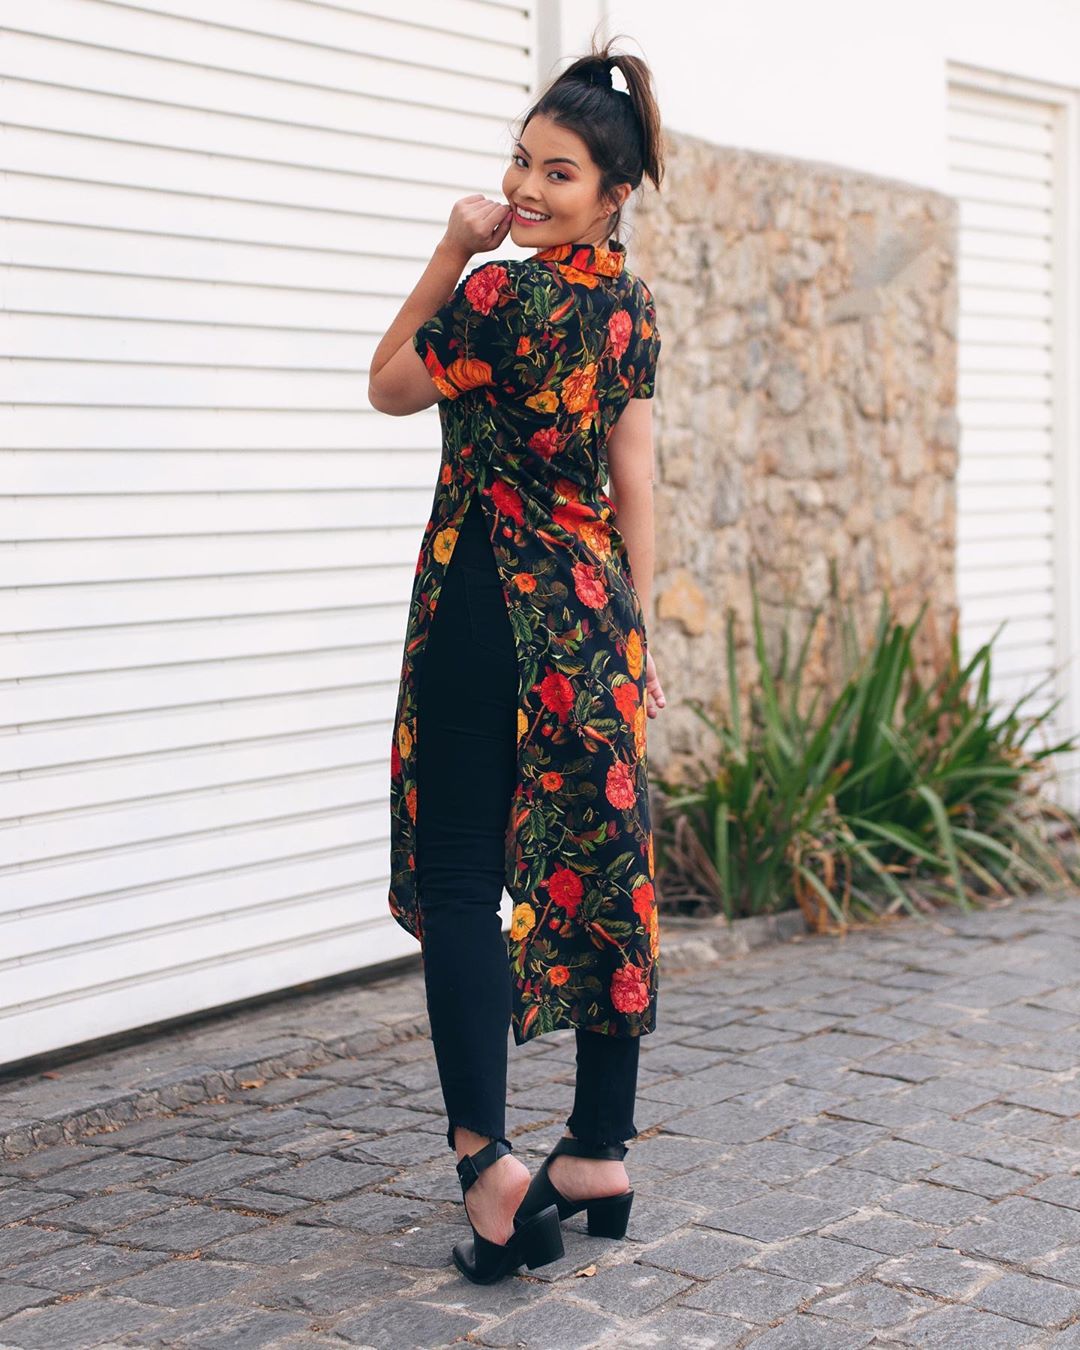 Kimono de mujer: 50 looks elegantes con esta superposición encantadora